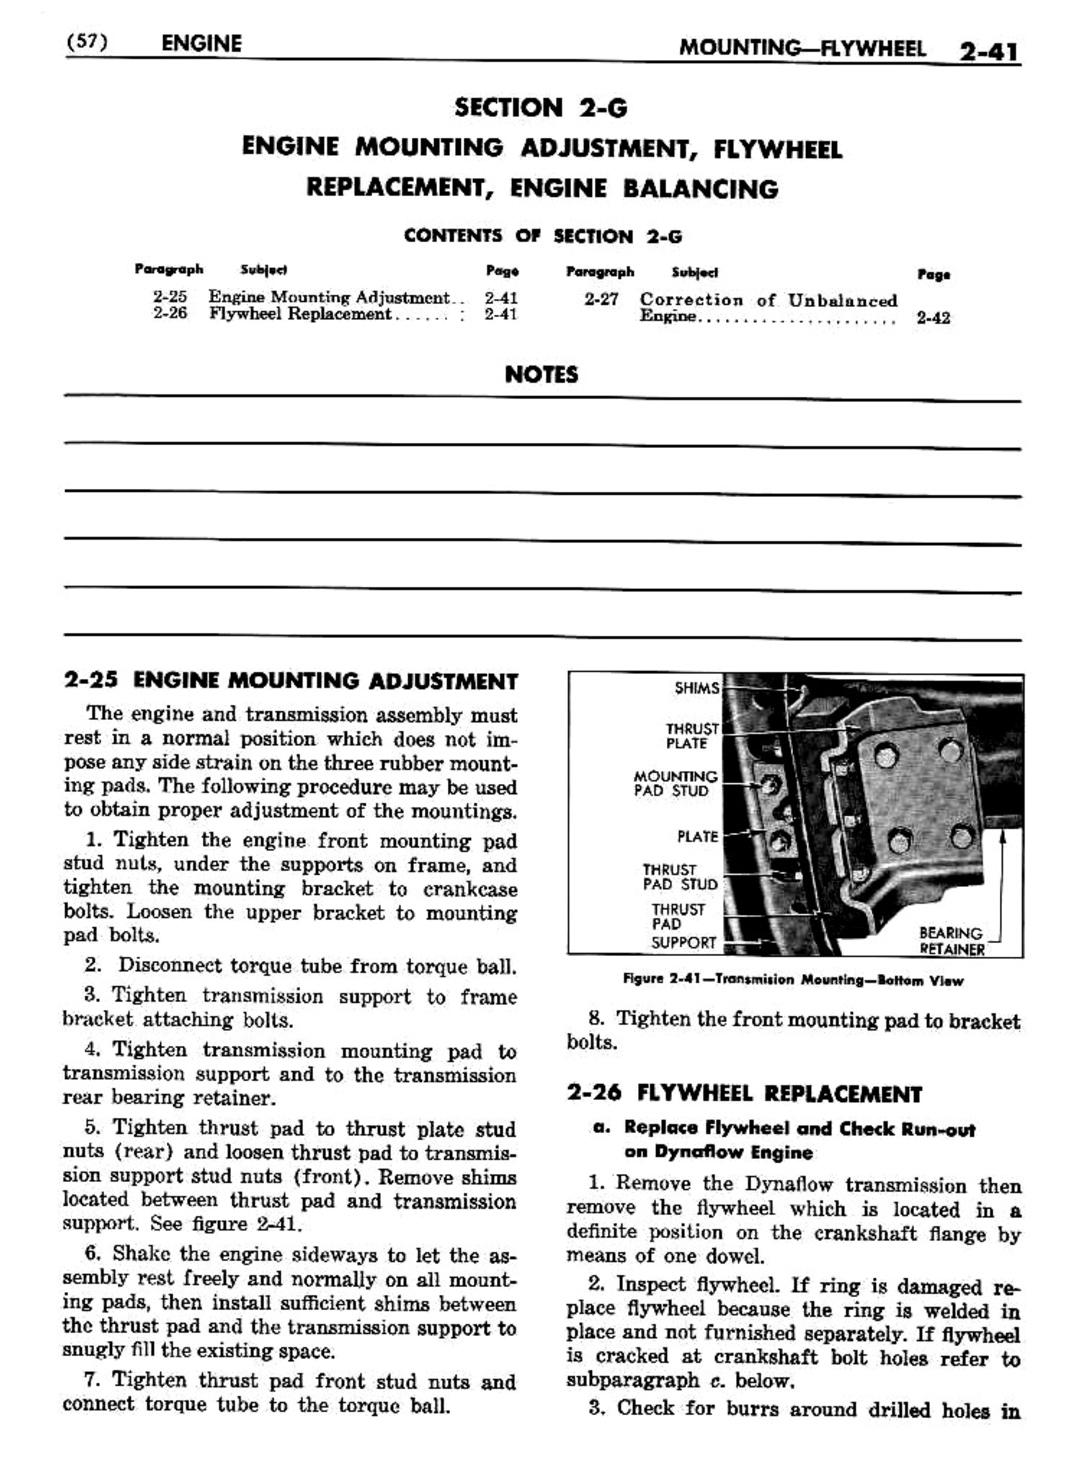 n_03 1956 Buick Shop Manual - Engine-041-041.jpg